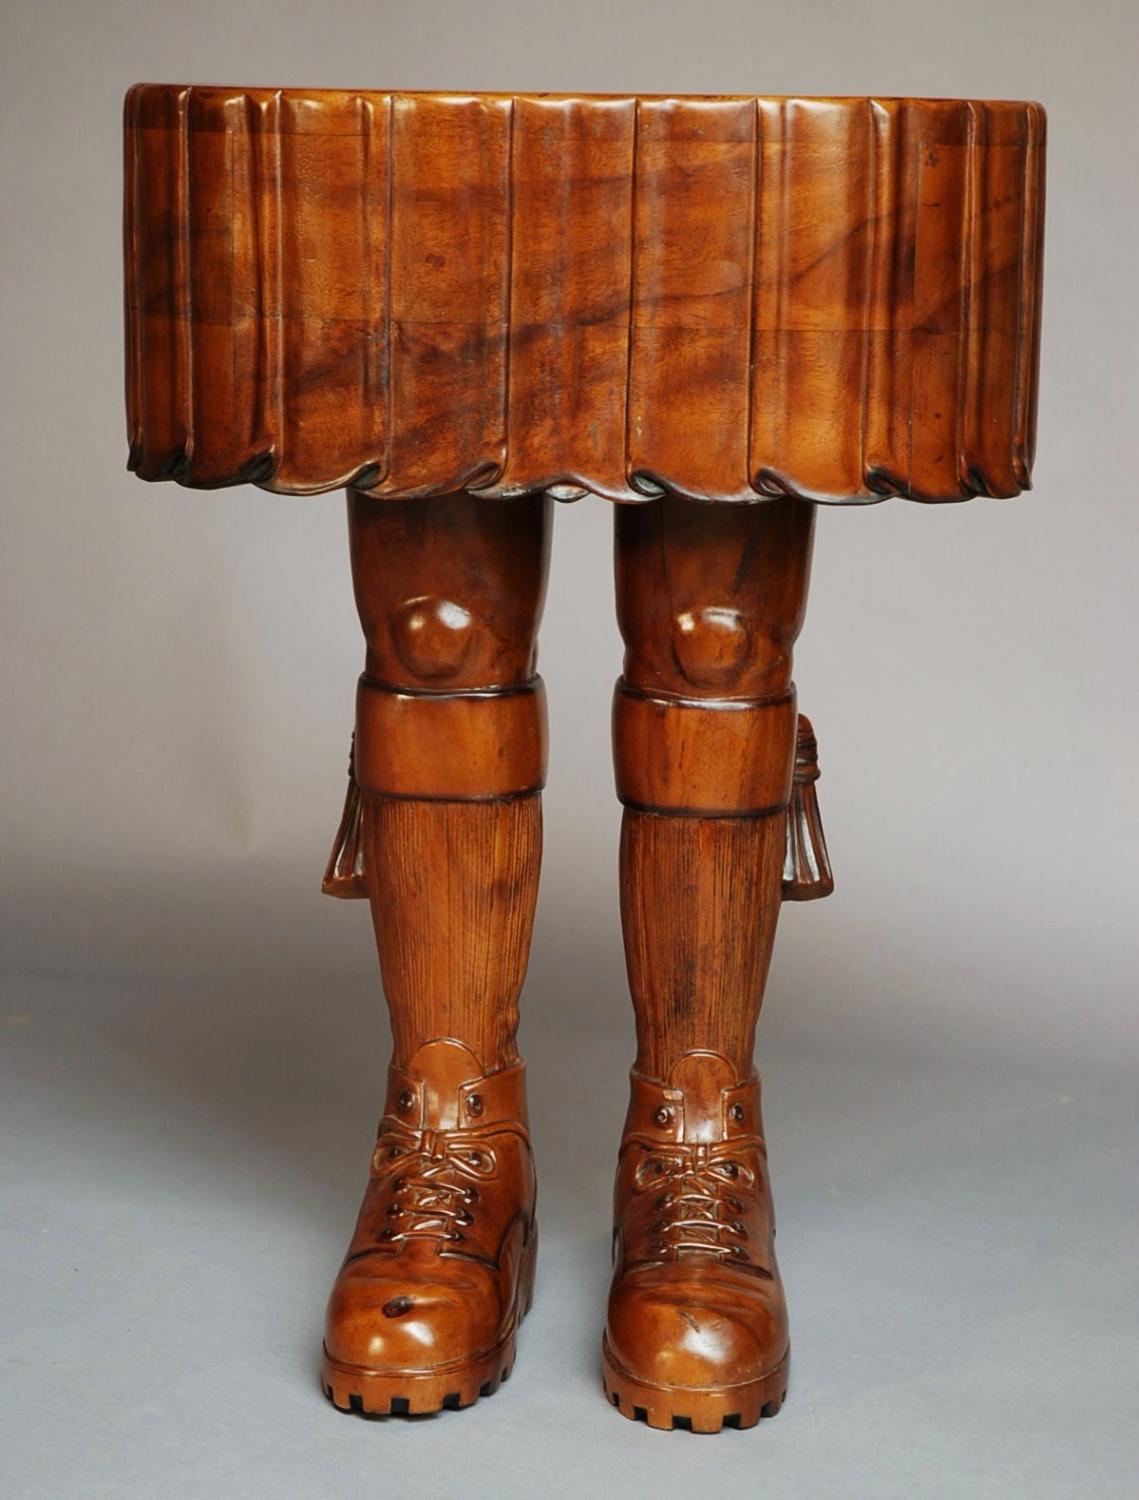 Decorative Scotsman's kilt table